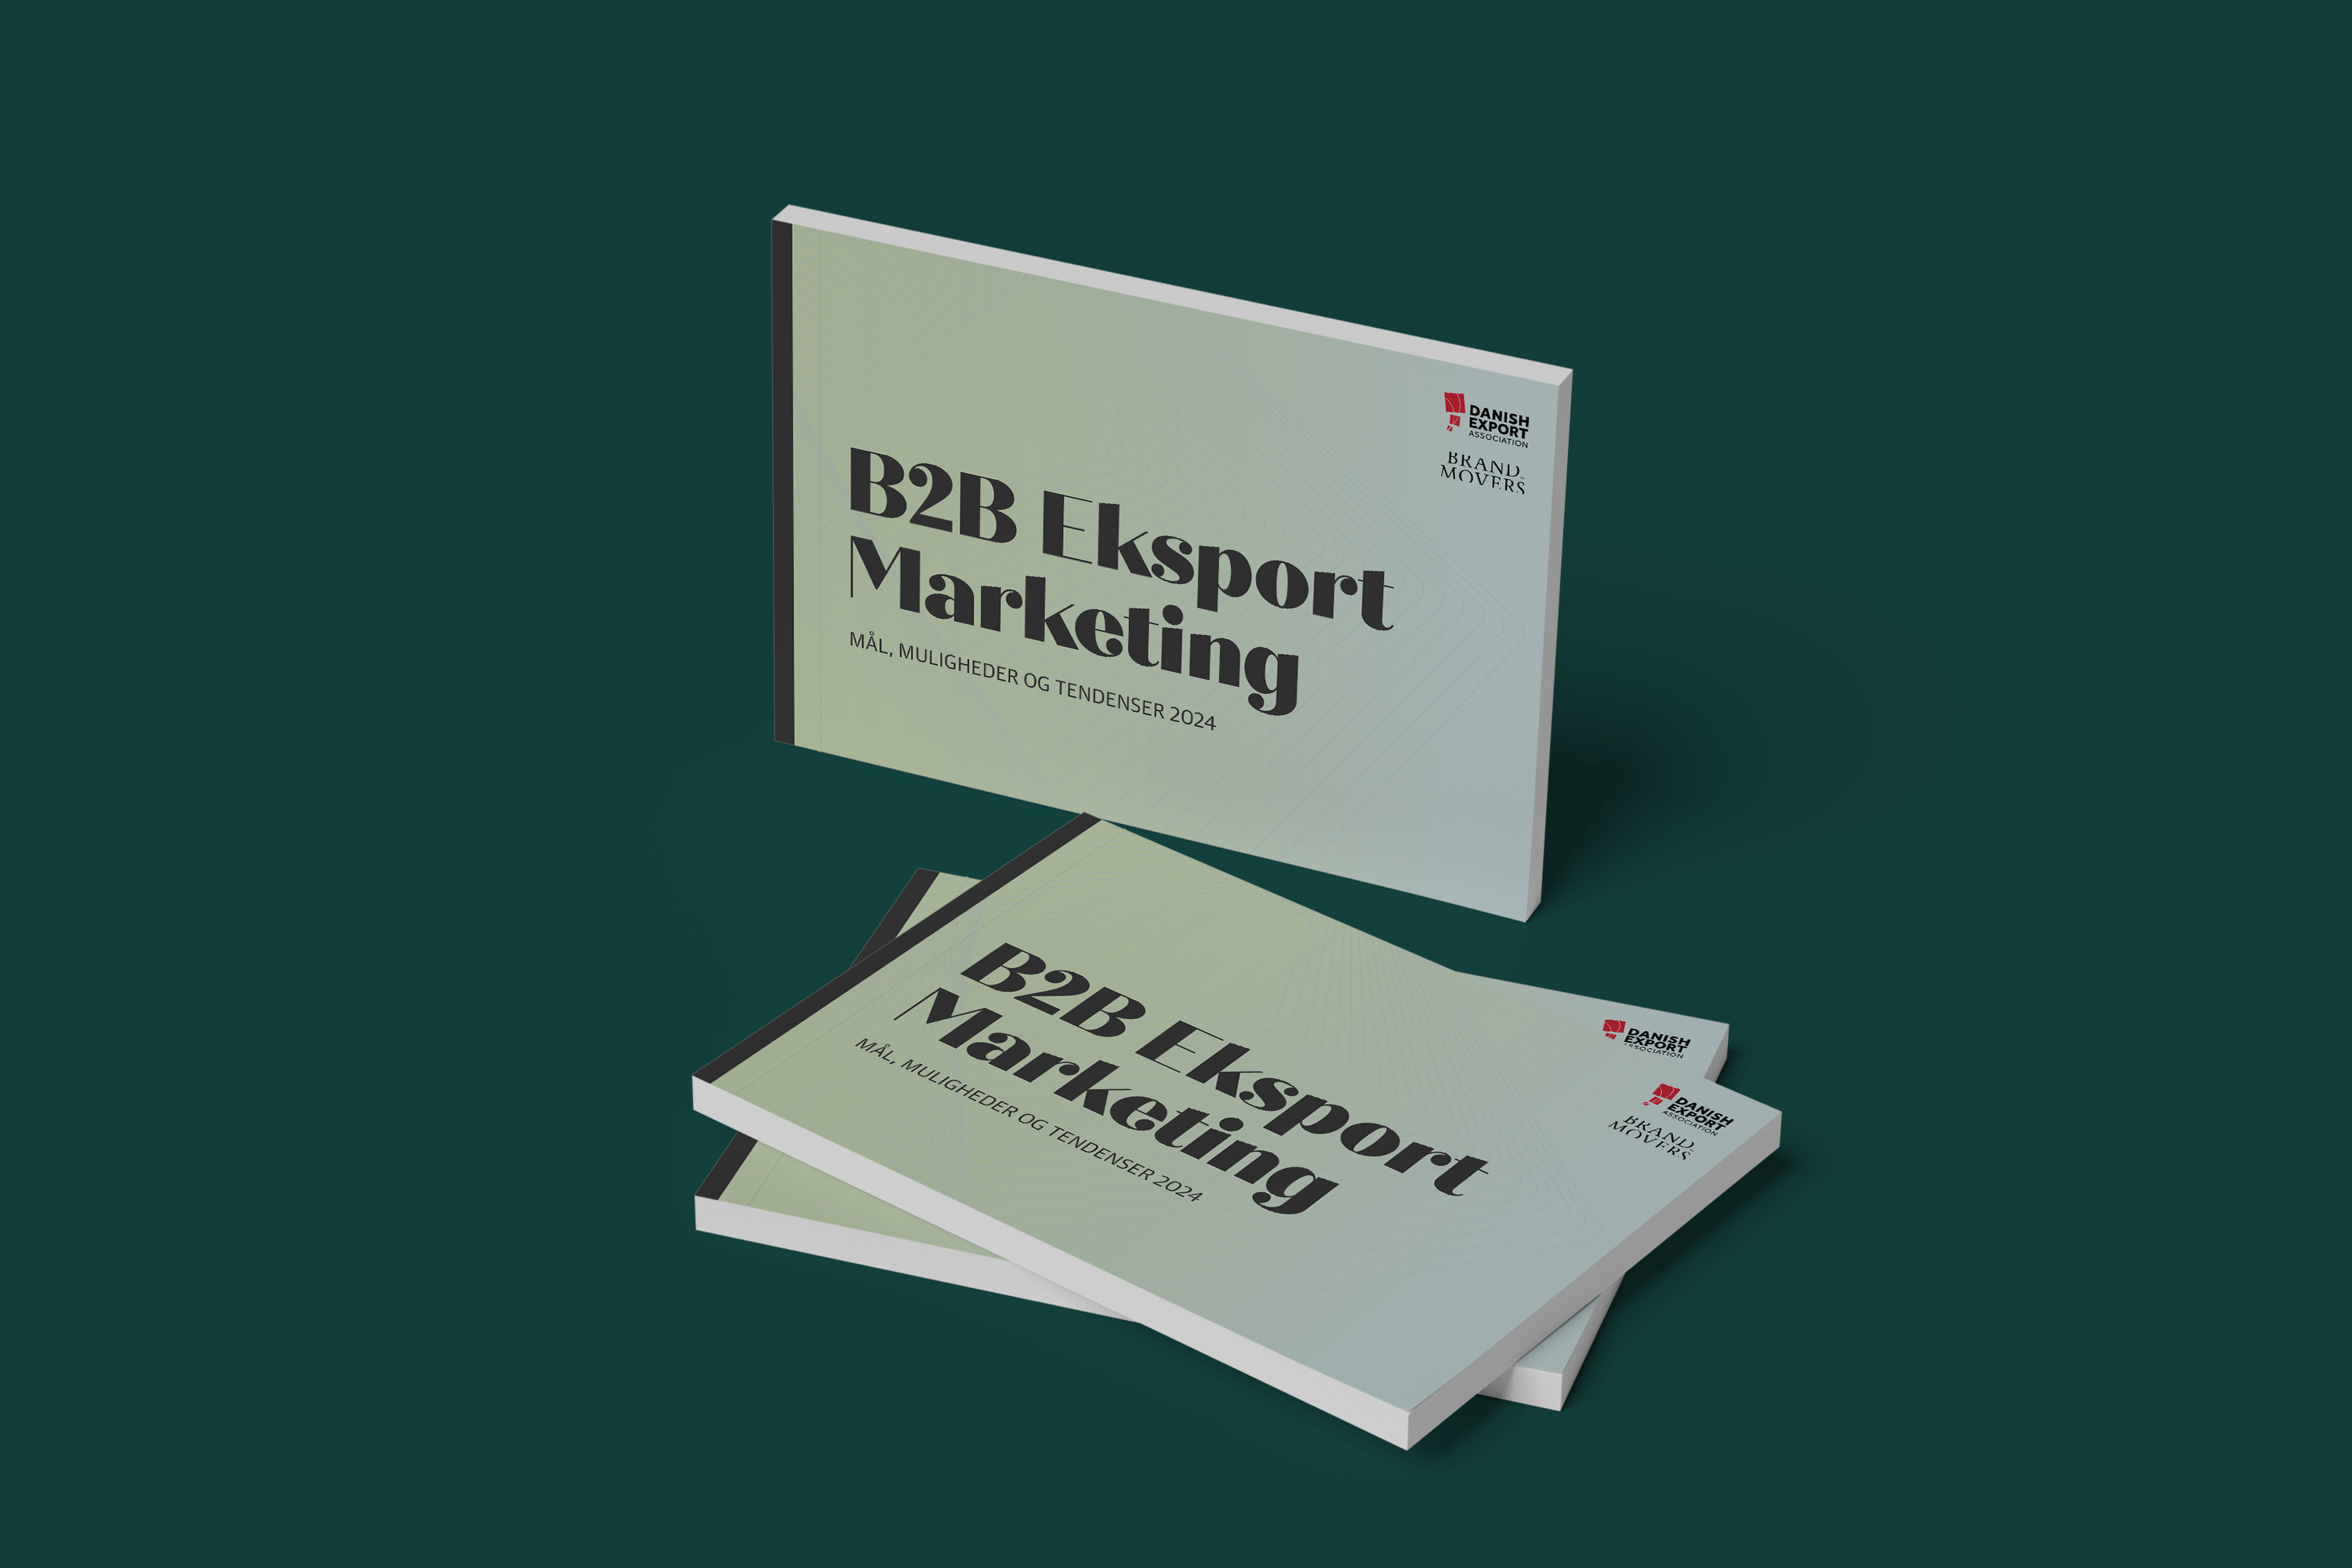 Eksport Marketing Rapport 2024